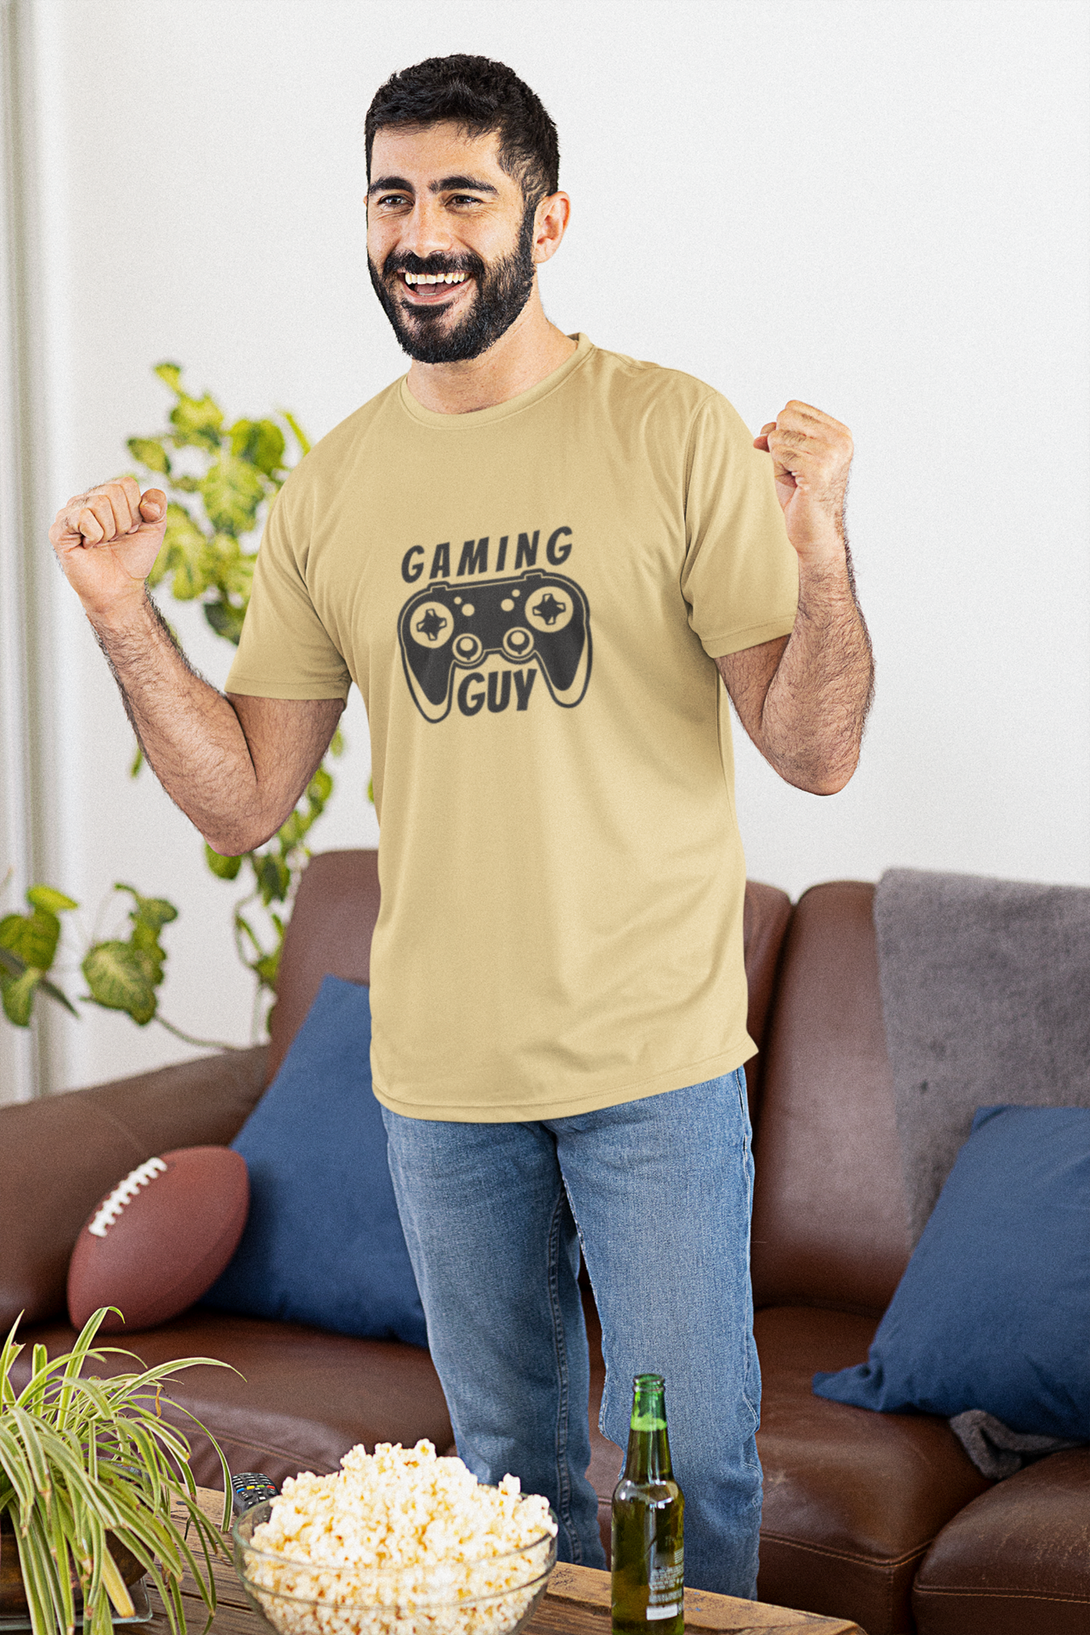 Gaming Guy Printed T-Shirt For Men - WowWaves - 6